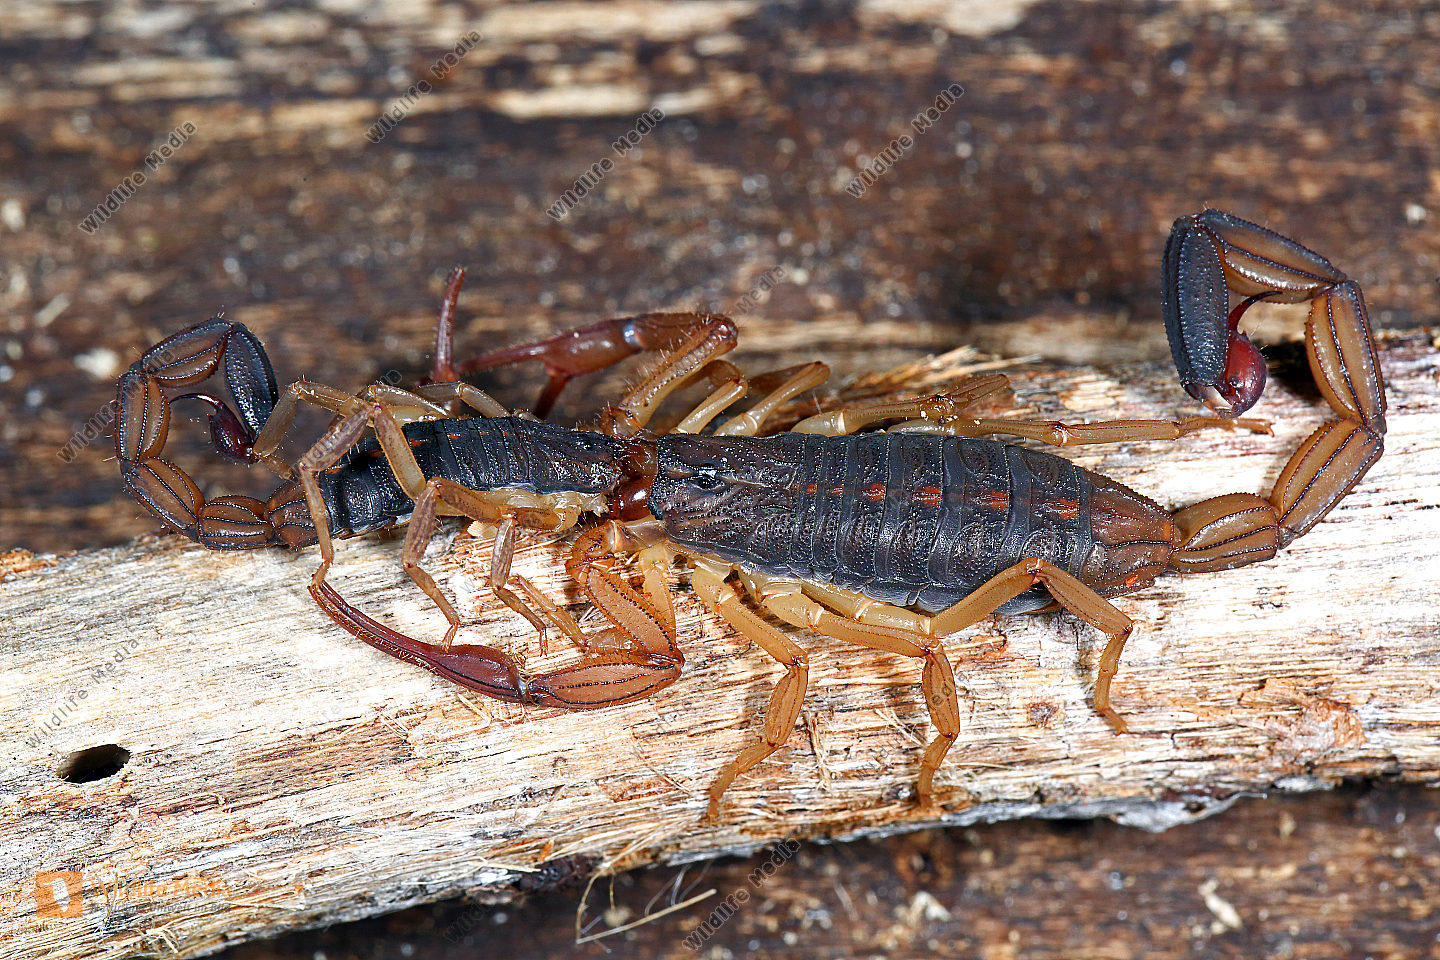 Skorpion limbatus